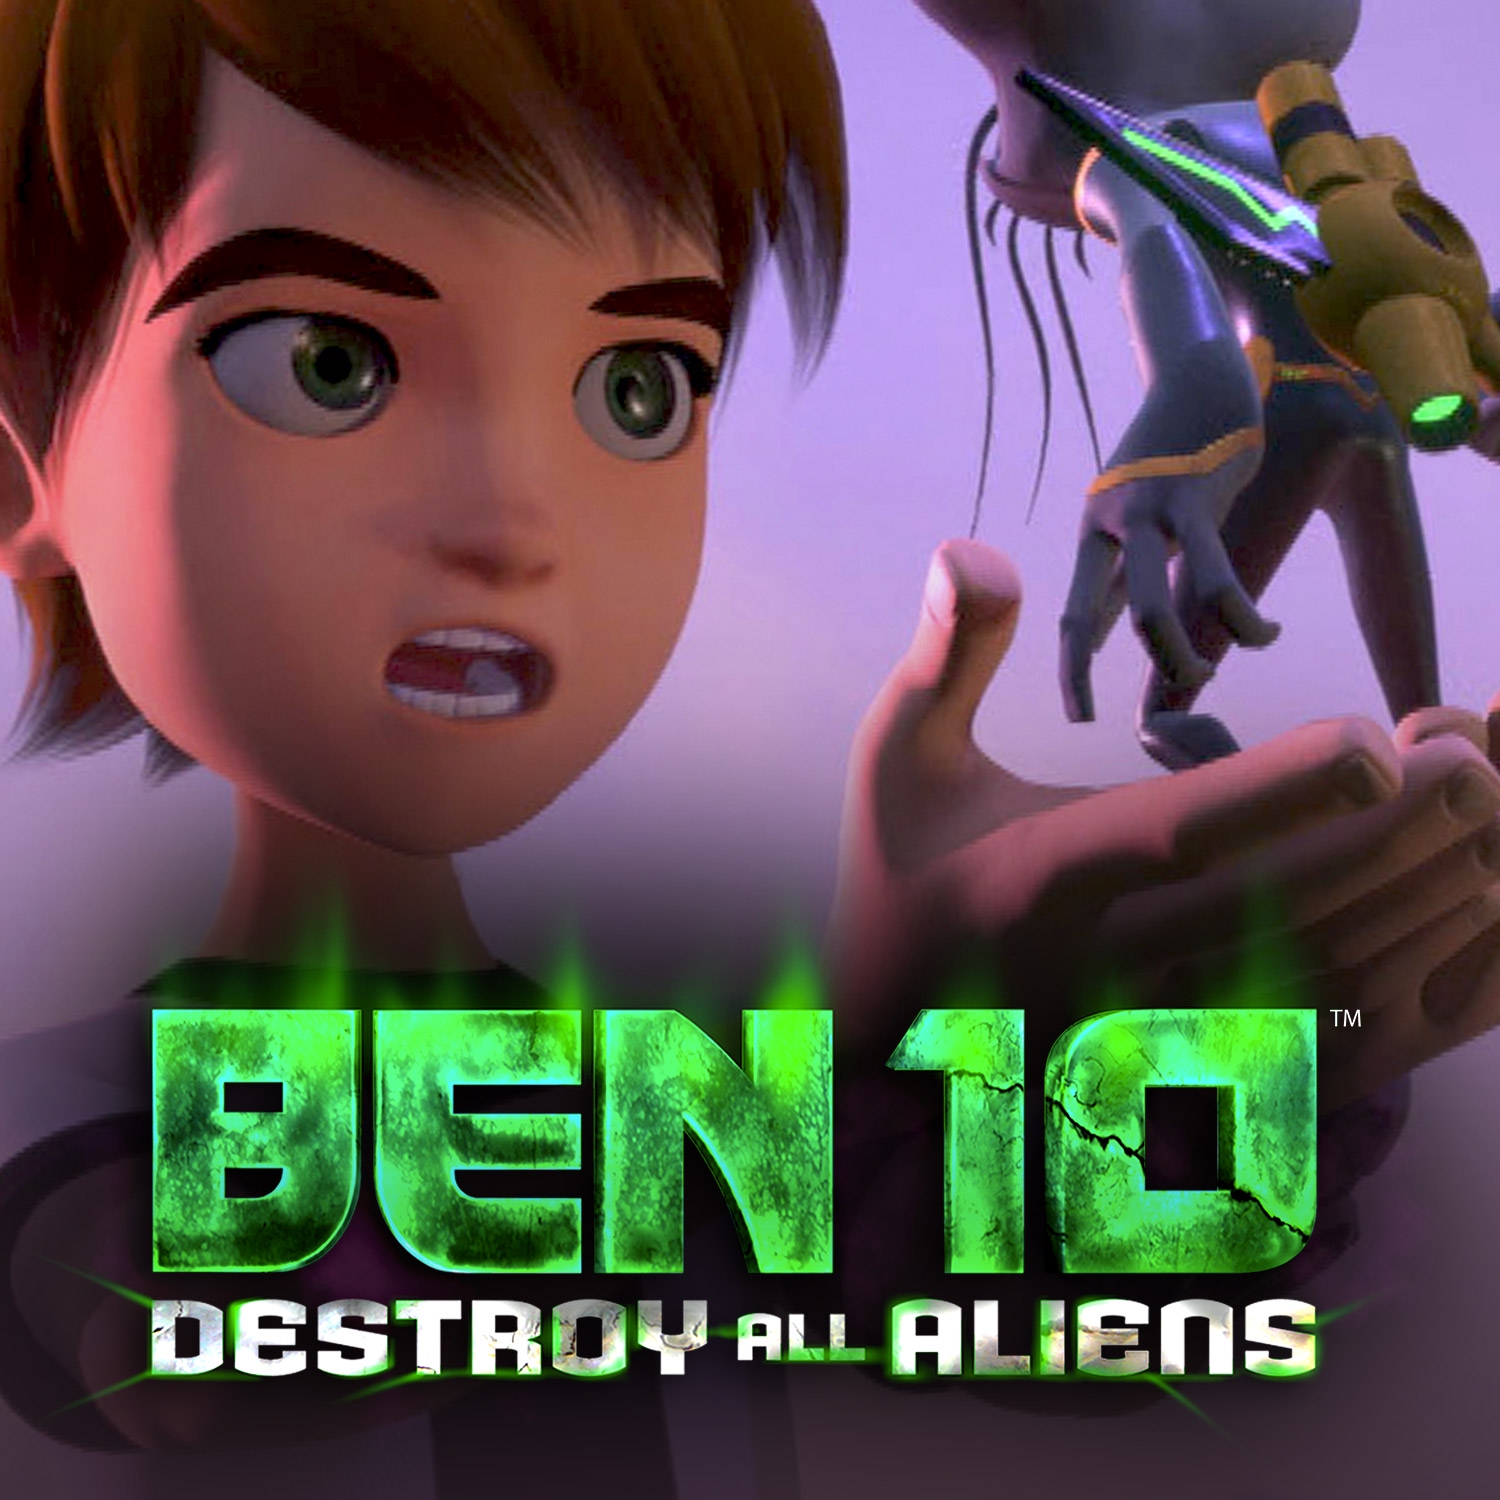 Stream Ben 10: Destroy All Aliens Online, Download and Watch HD Movies